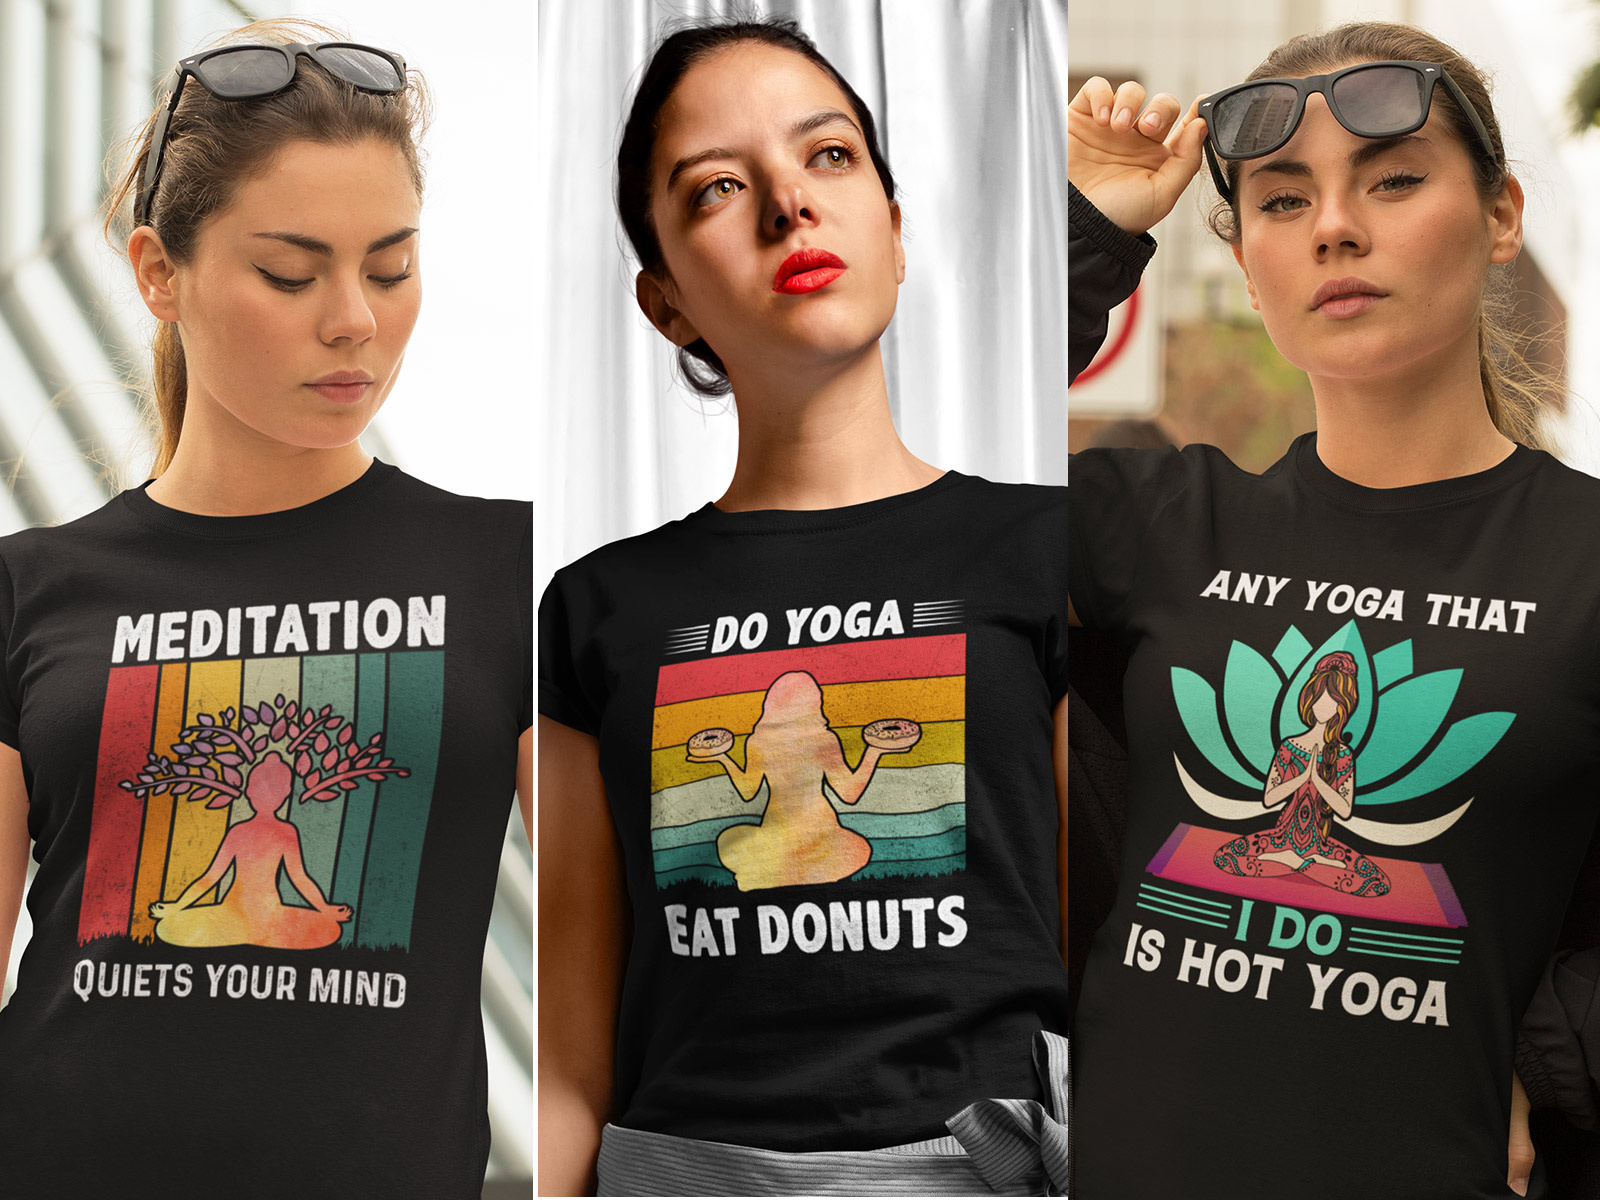 Yoga Quote Woman T-shirt Design Vector Download